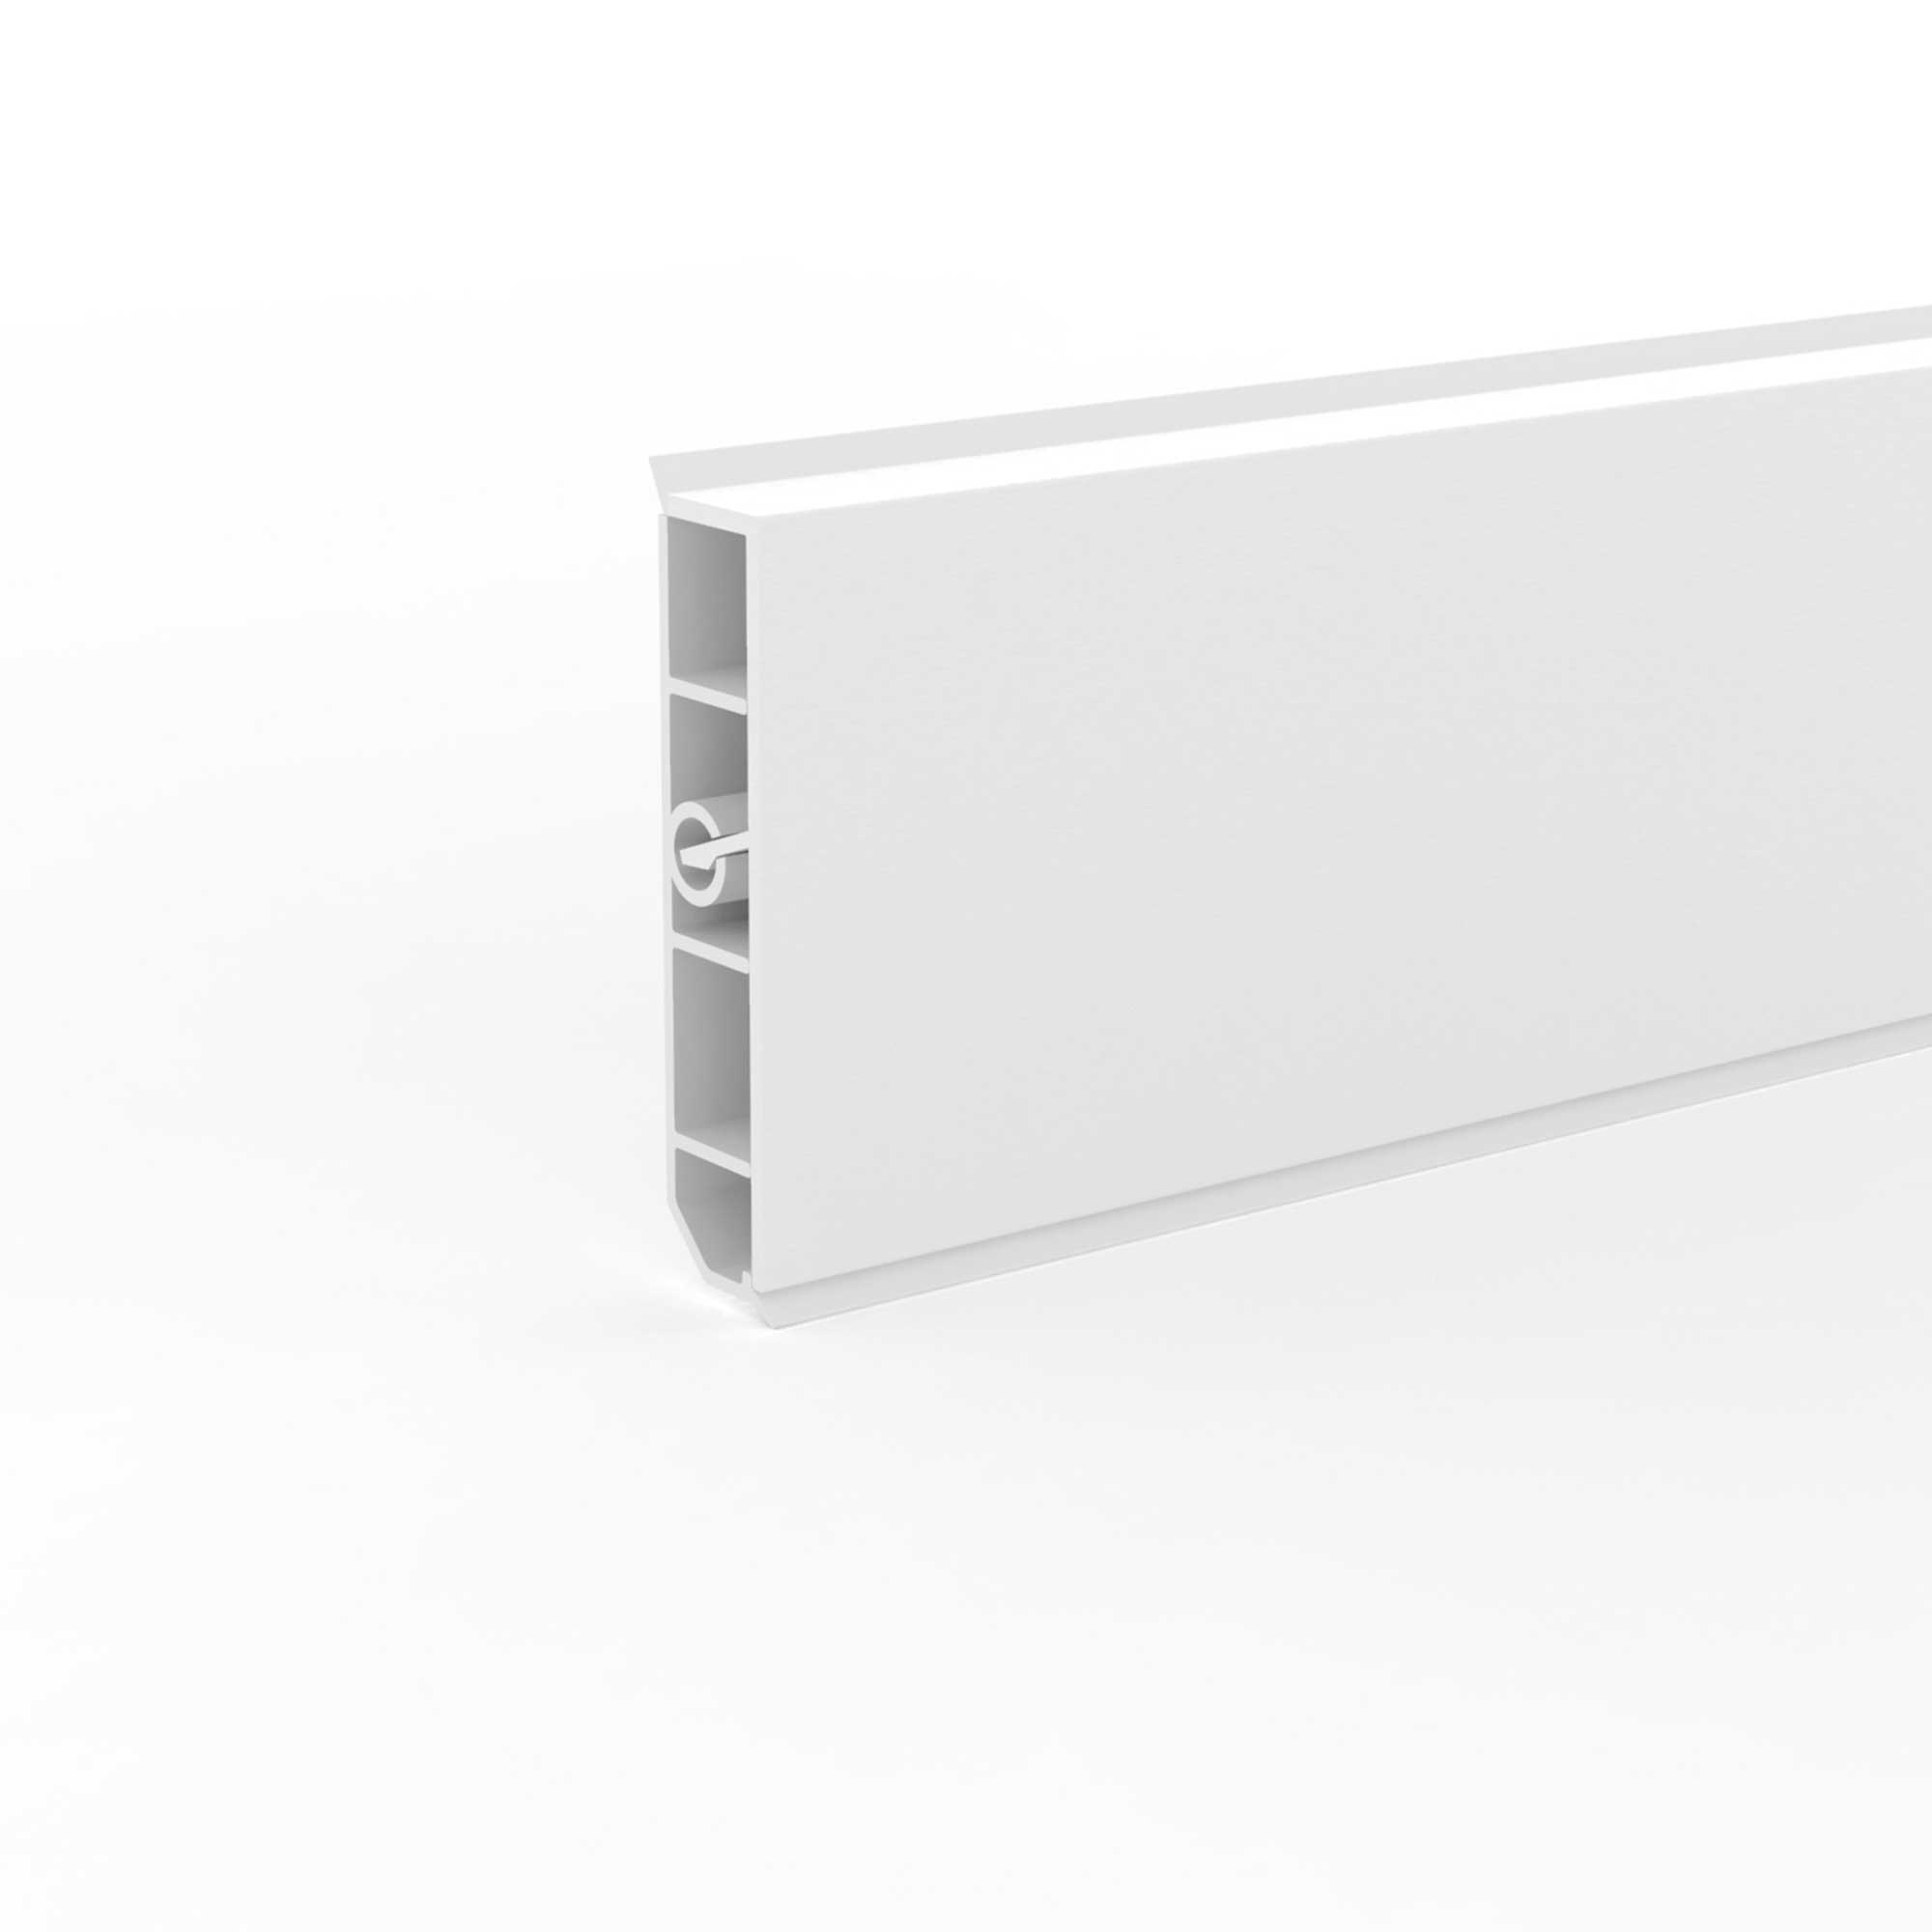 Deckprofil 'Cubica LS 80' No Light weiß 250 x 8 x 2 cm, ohne LED + product picture